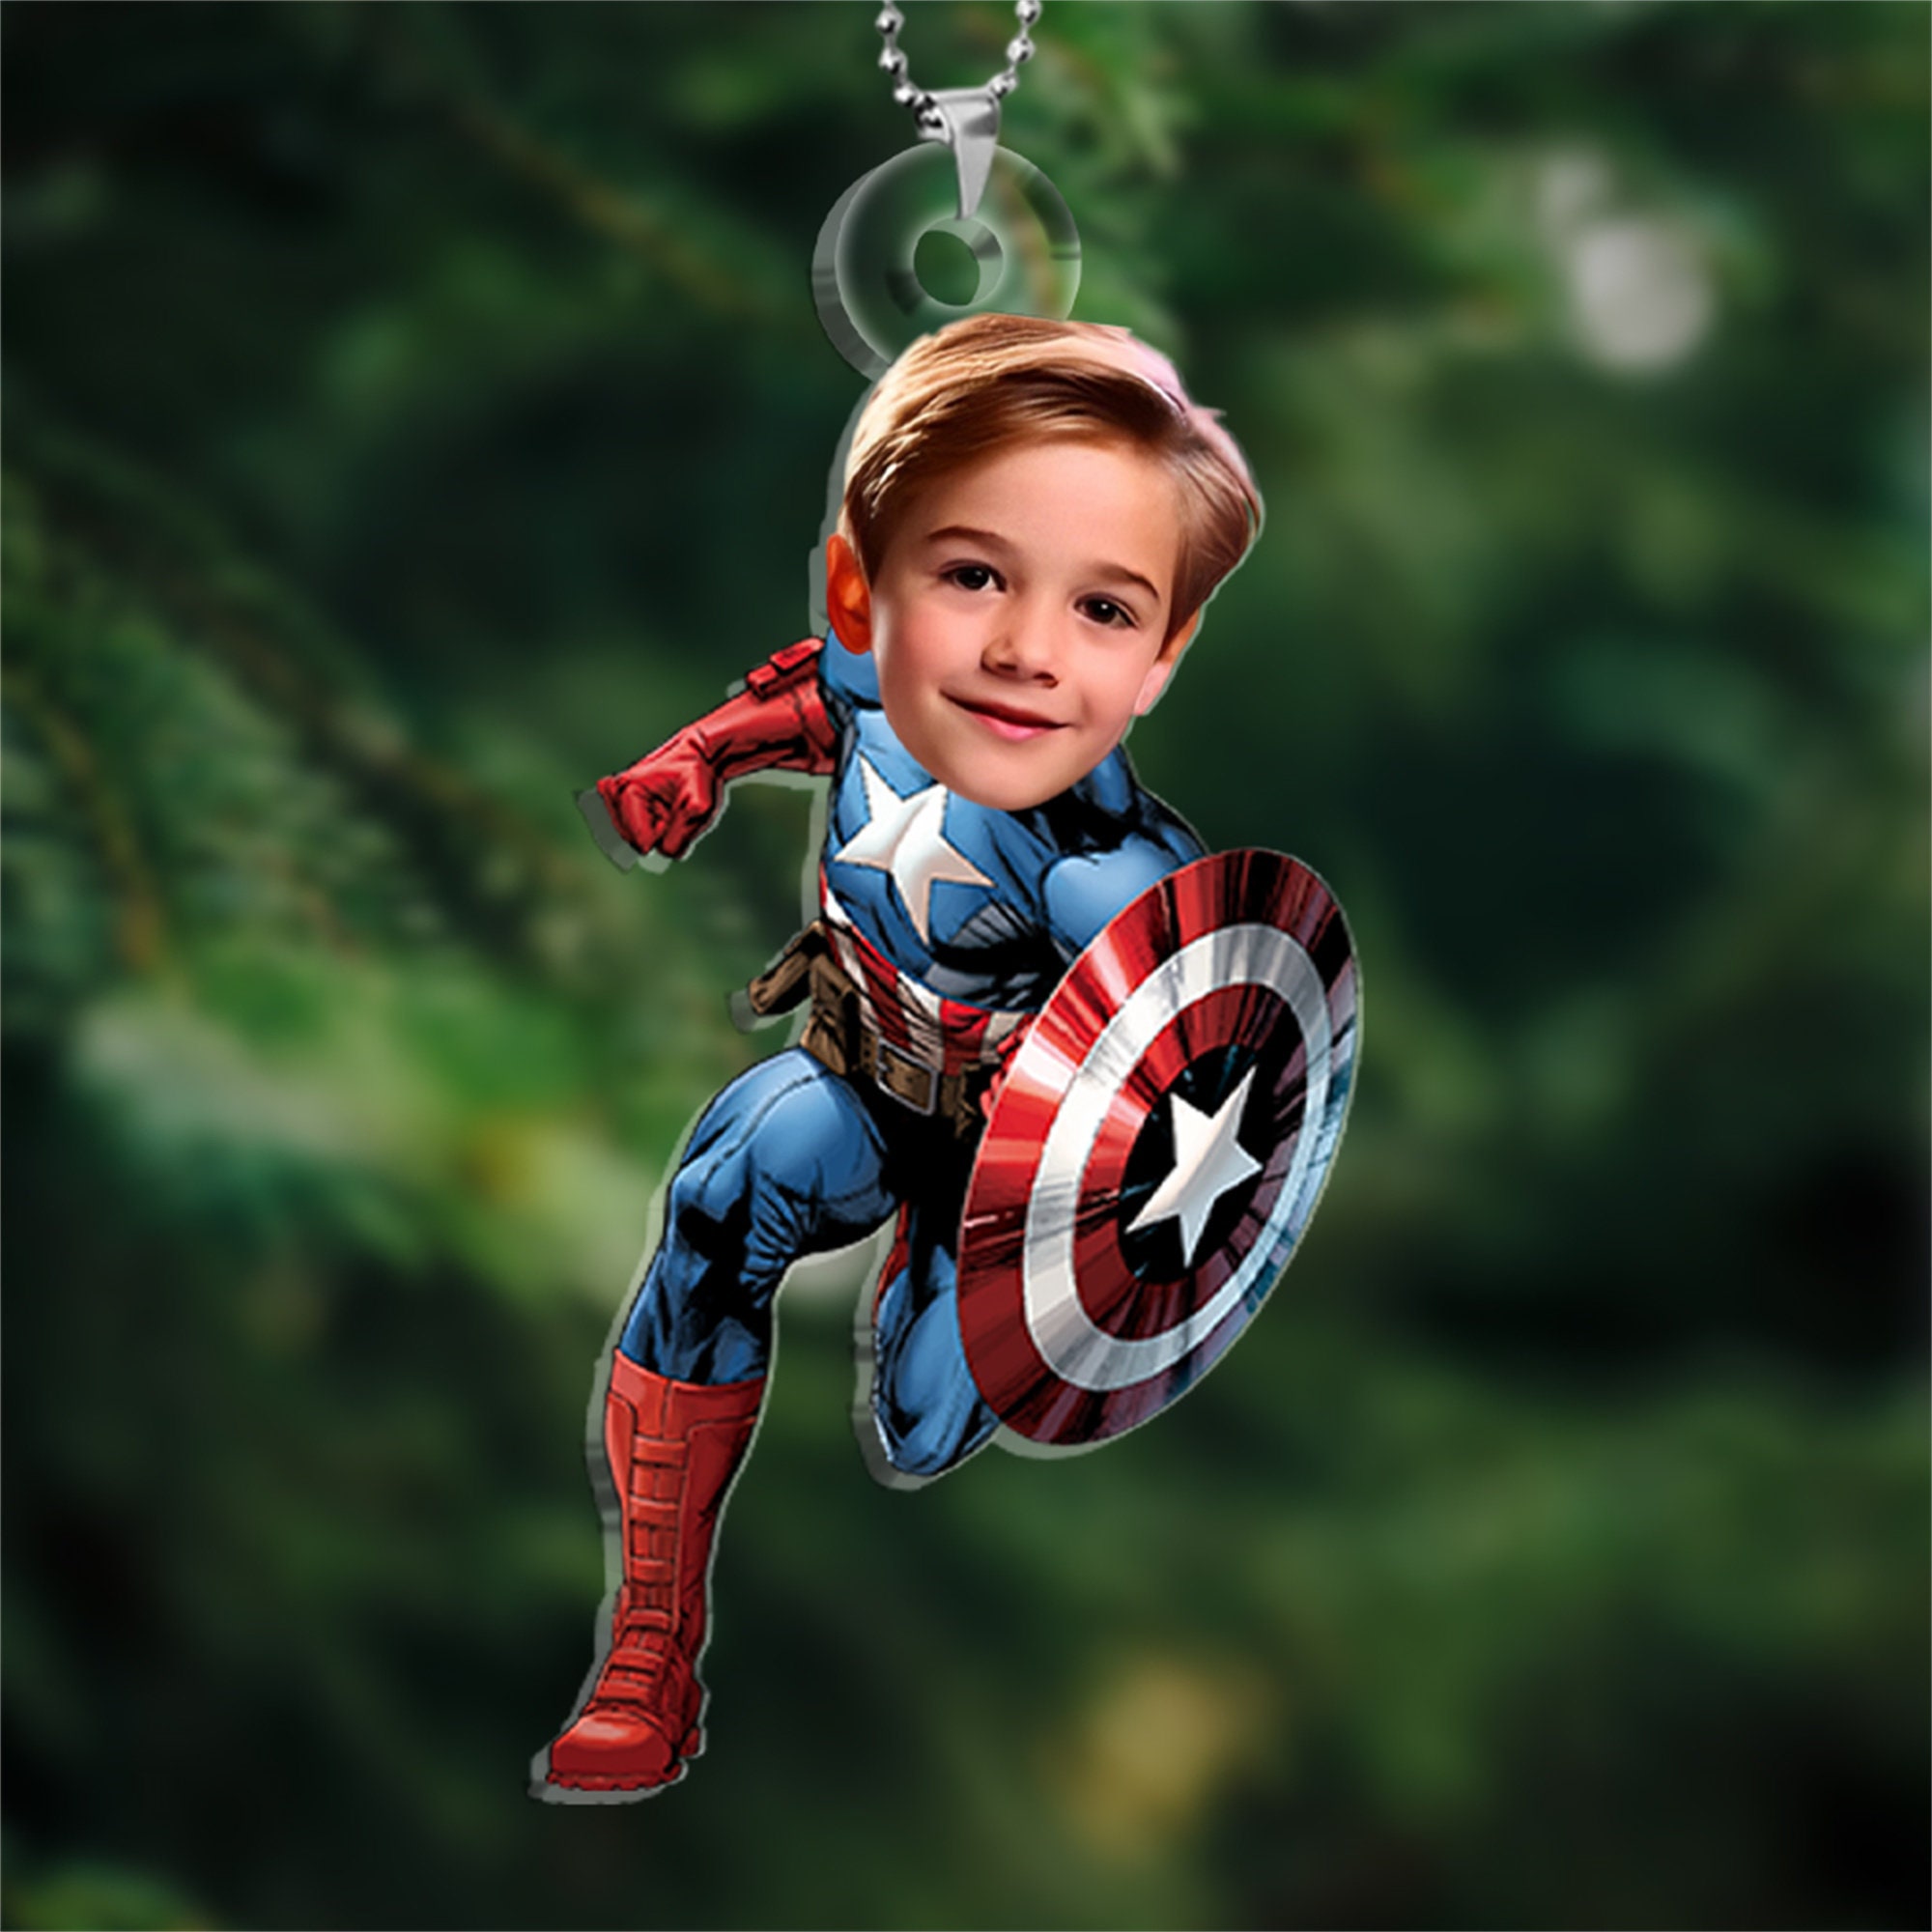 Personalized Superhero Ornament